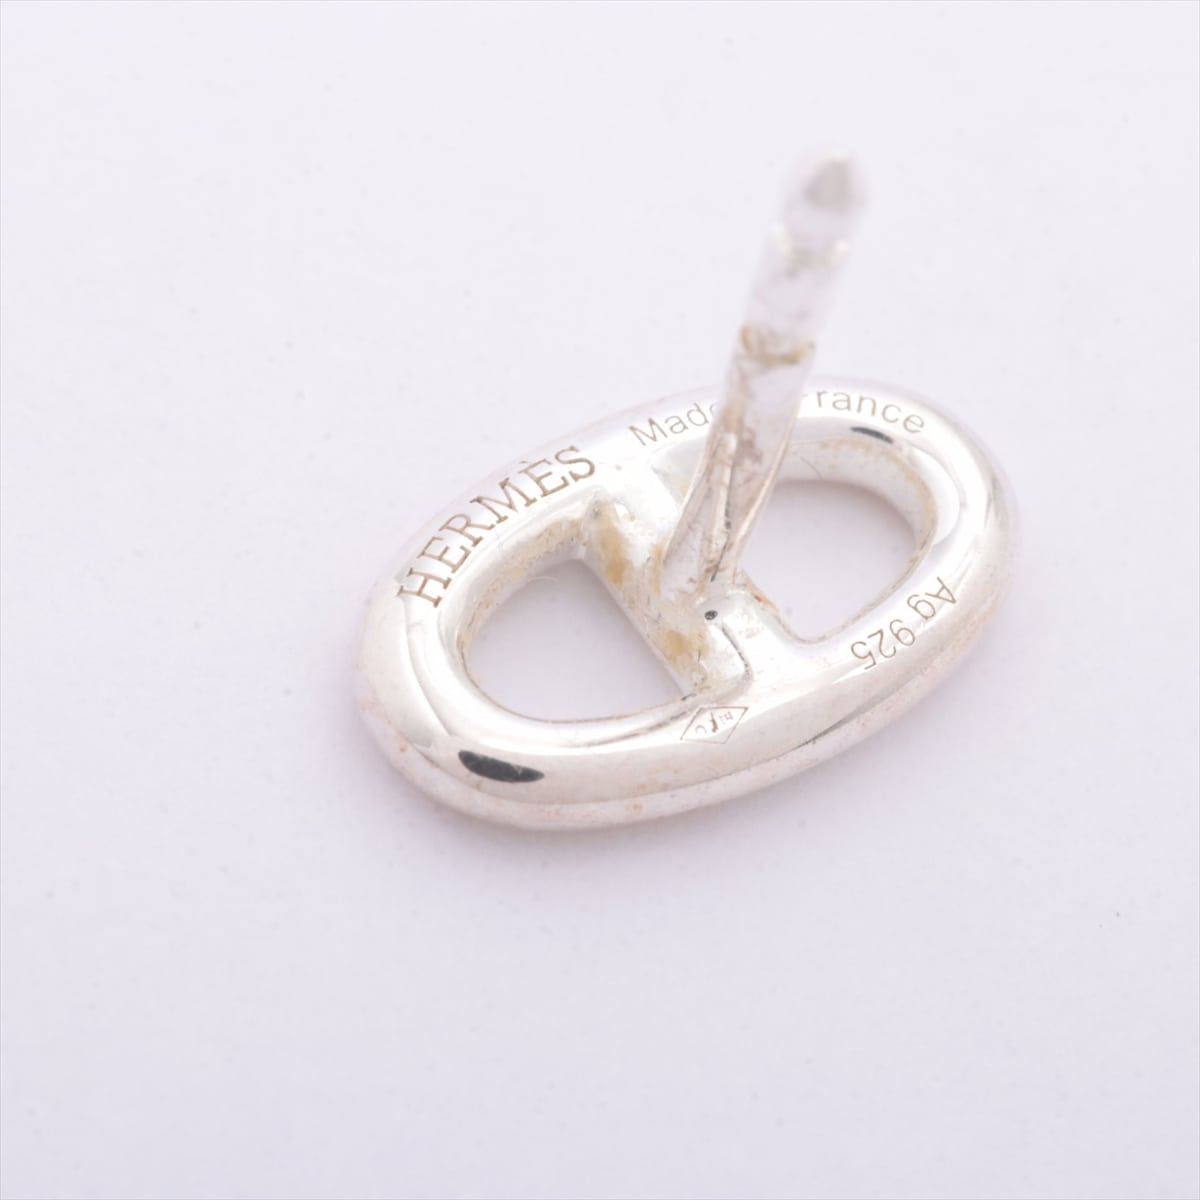 Hermès Chaîne d'Ancre Piercing jewelry (for both ears) 925 1.6g Silver